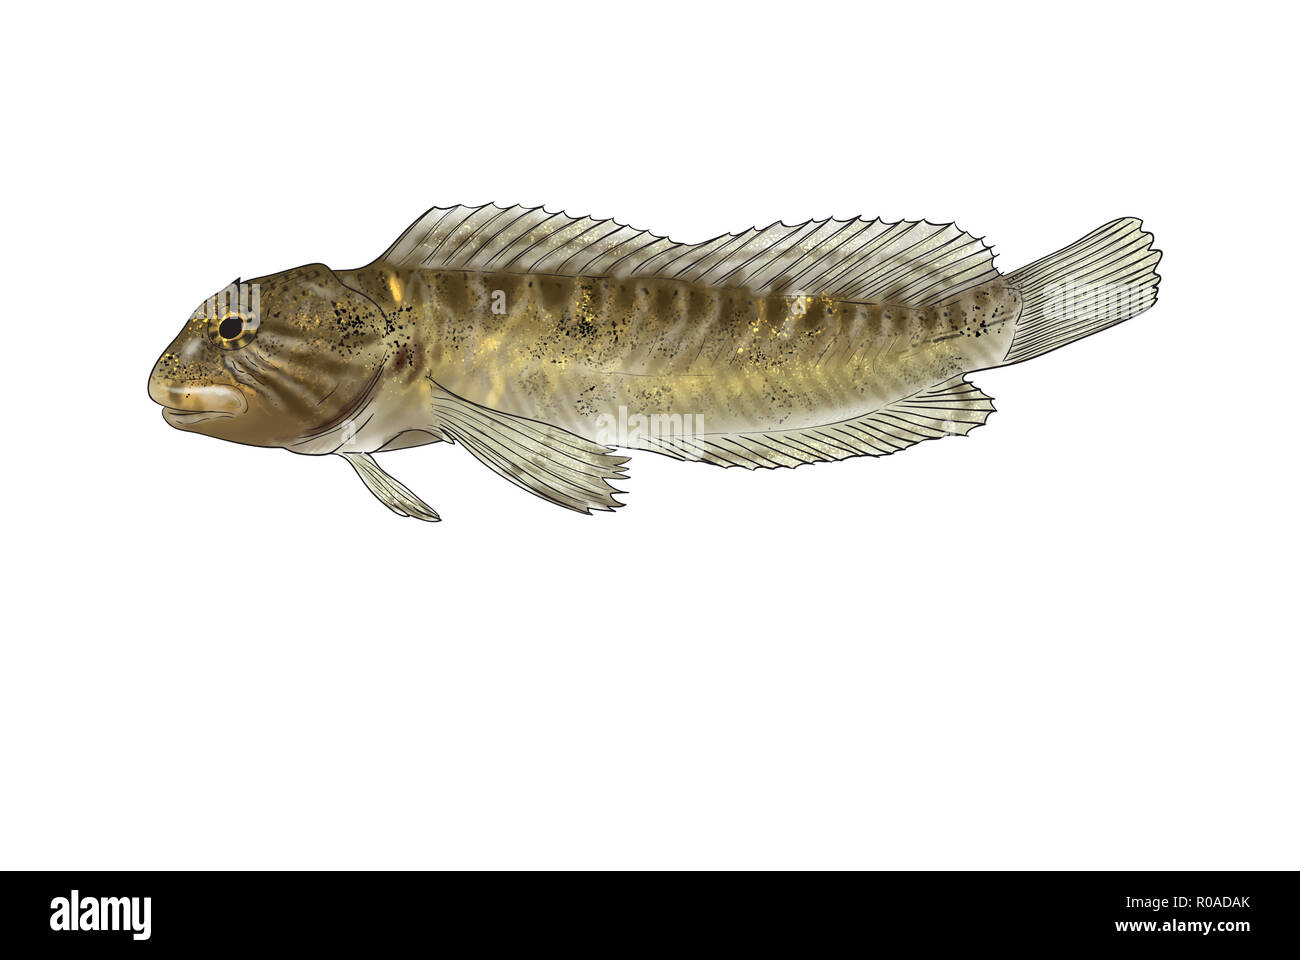 Digital illustration of freshwater fish,freshwater blenny Stock Photo